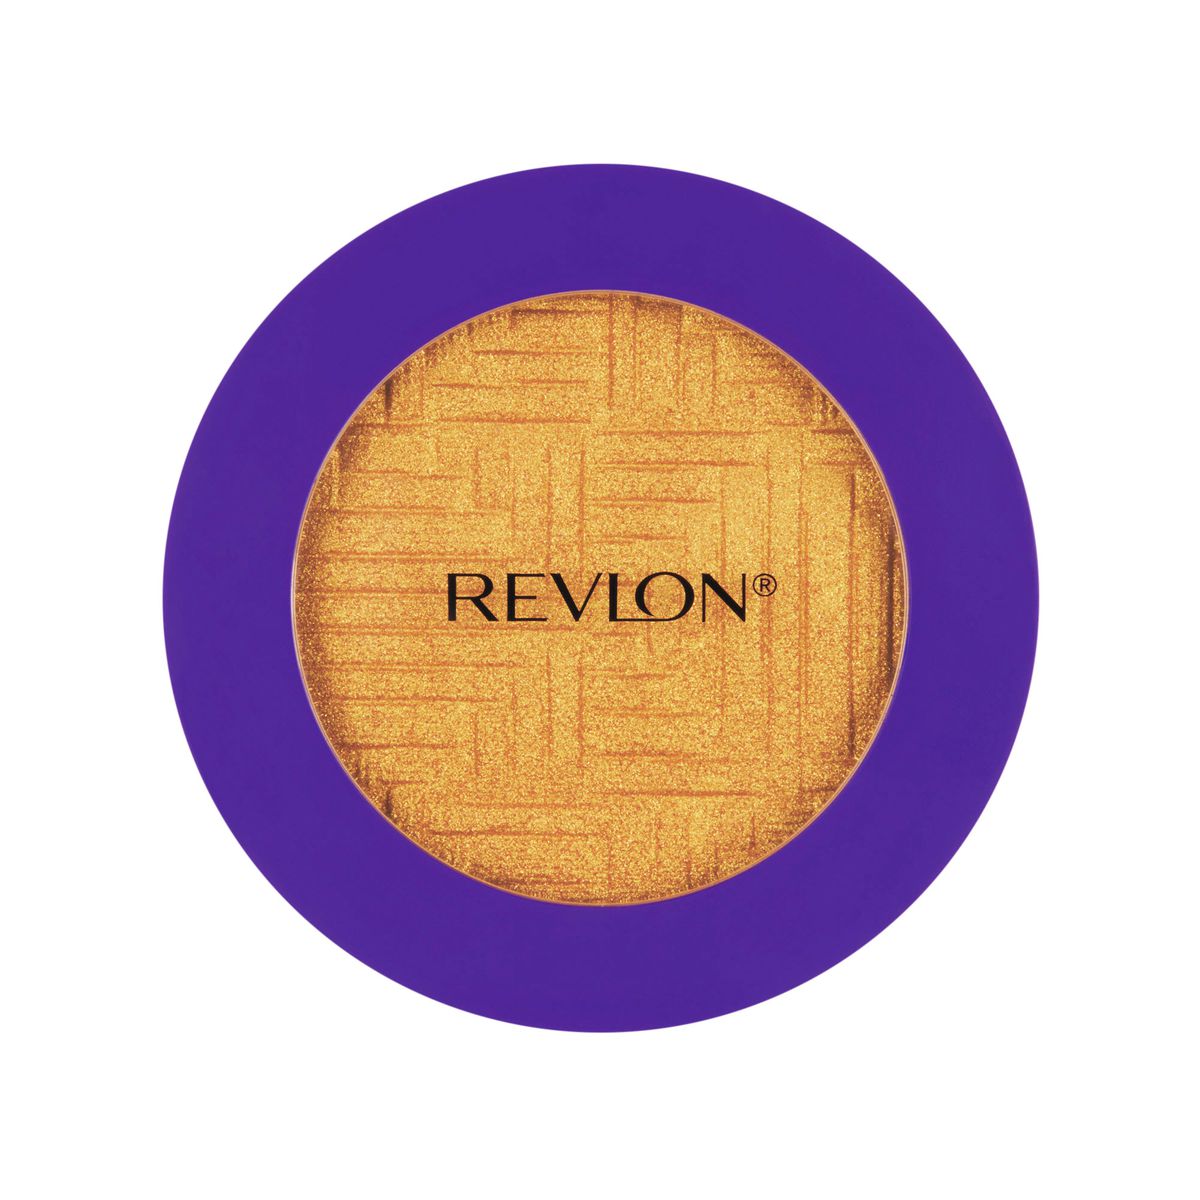 Revlon Electric Shock Highlighting Powder in Light It Up